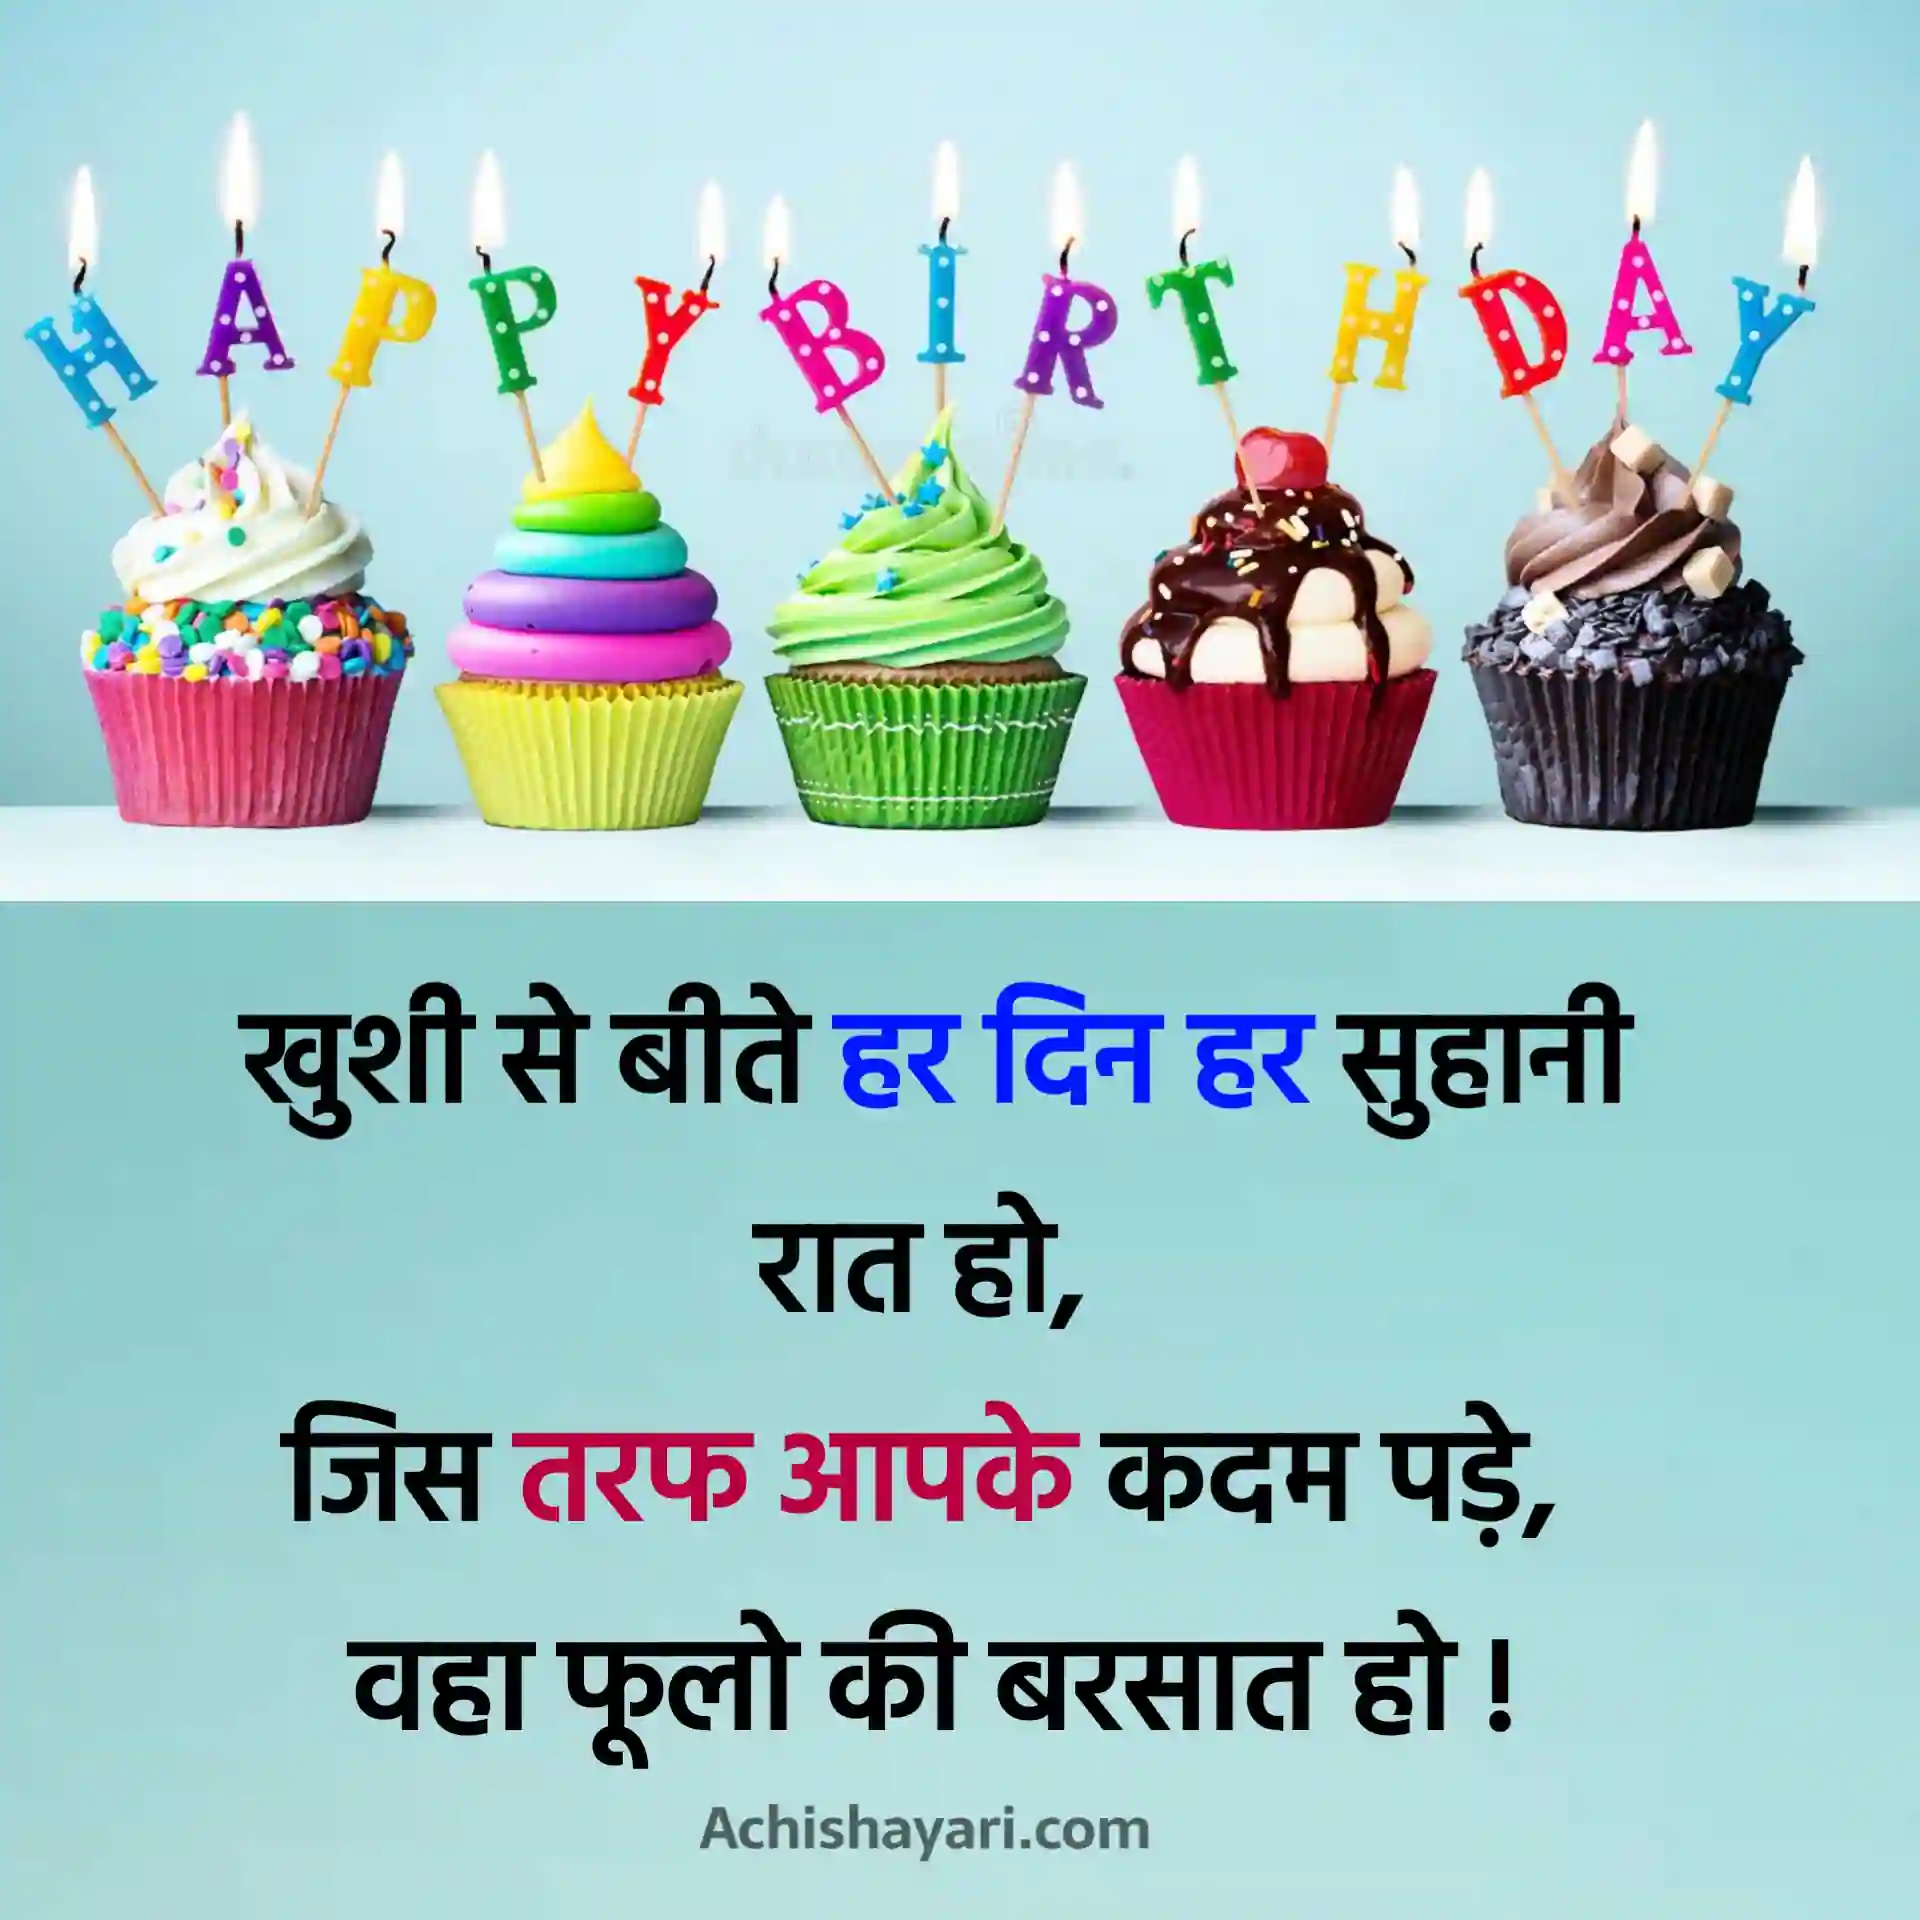 Happy Birthdaay Wishes Image Hindi